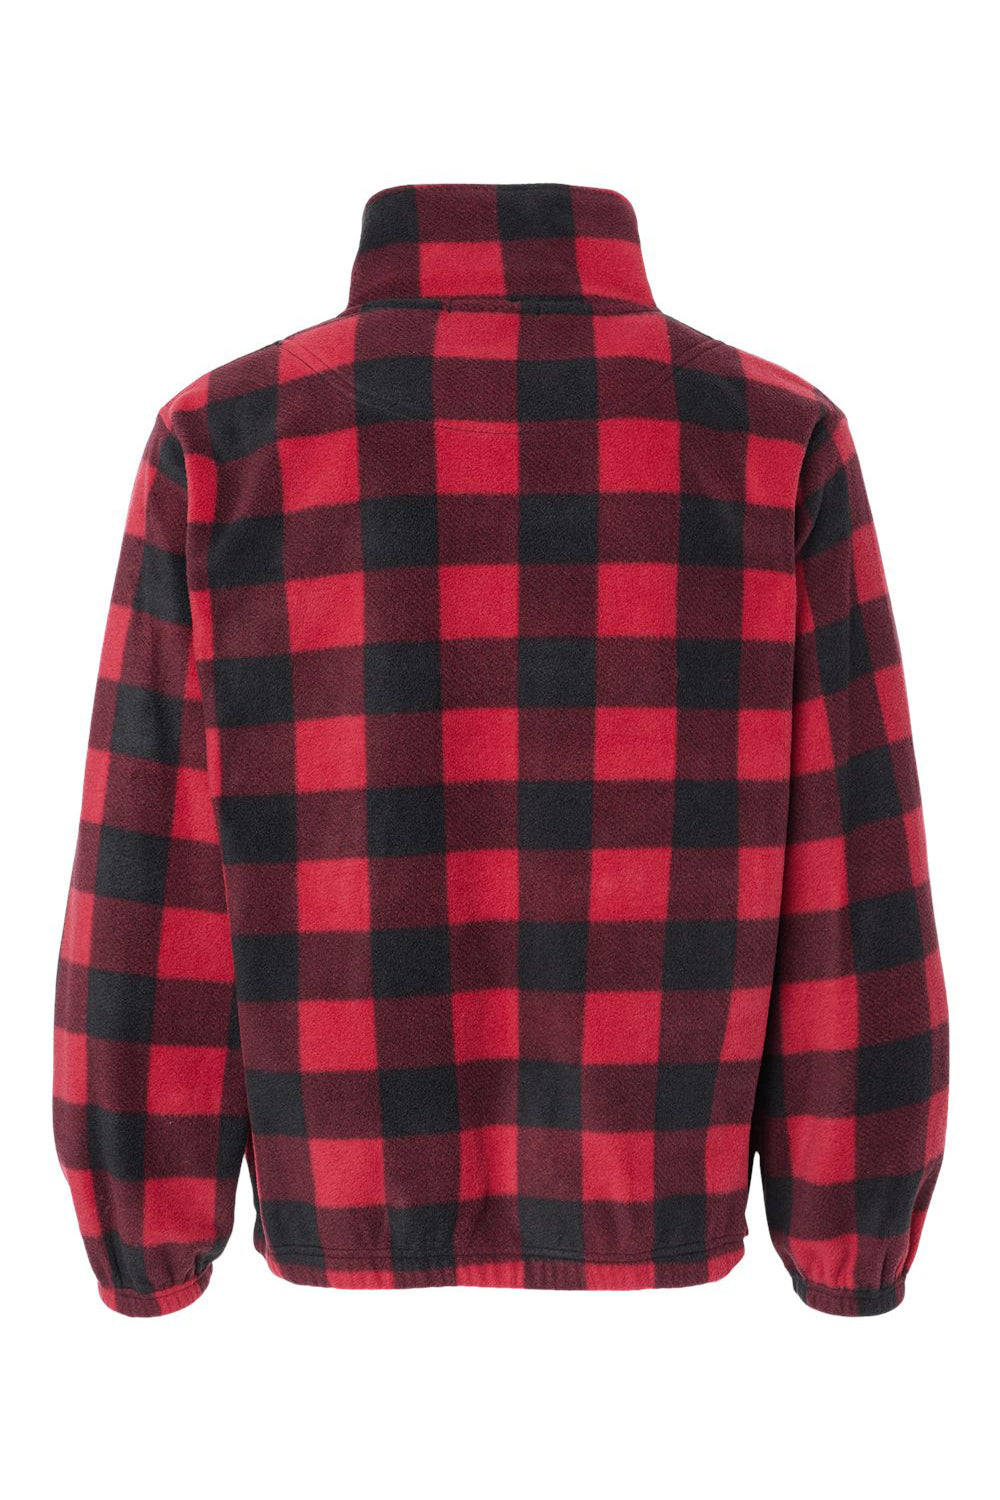 Burnside 3062 Mens Polar Fleece Full Zip Sweatshirt Red/Black Flat Back